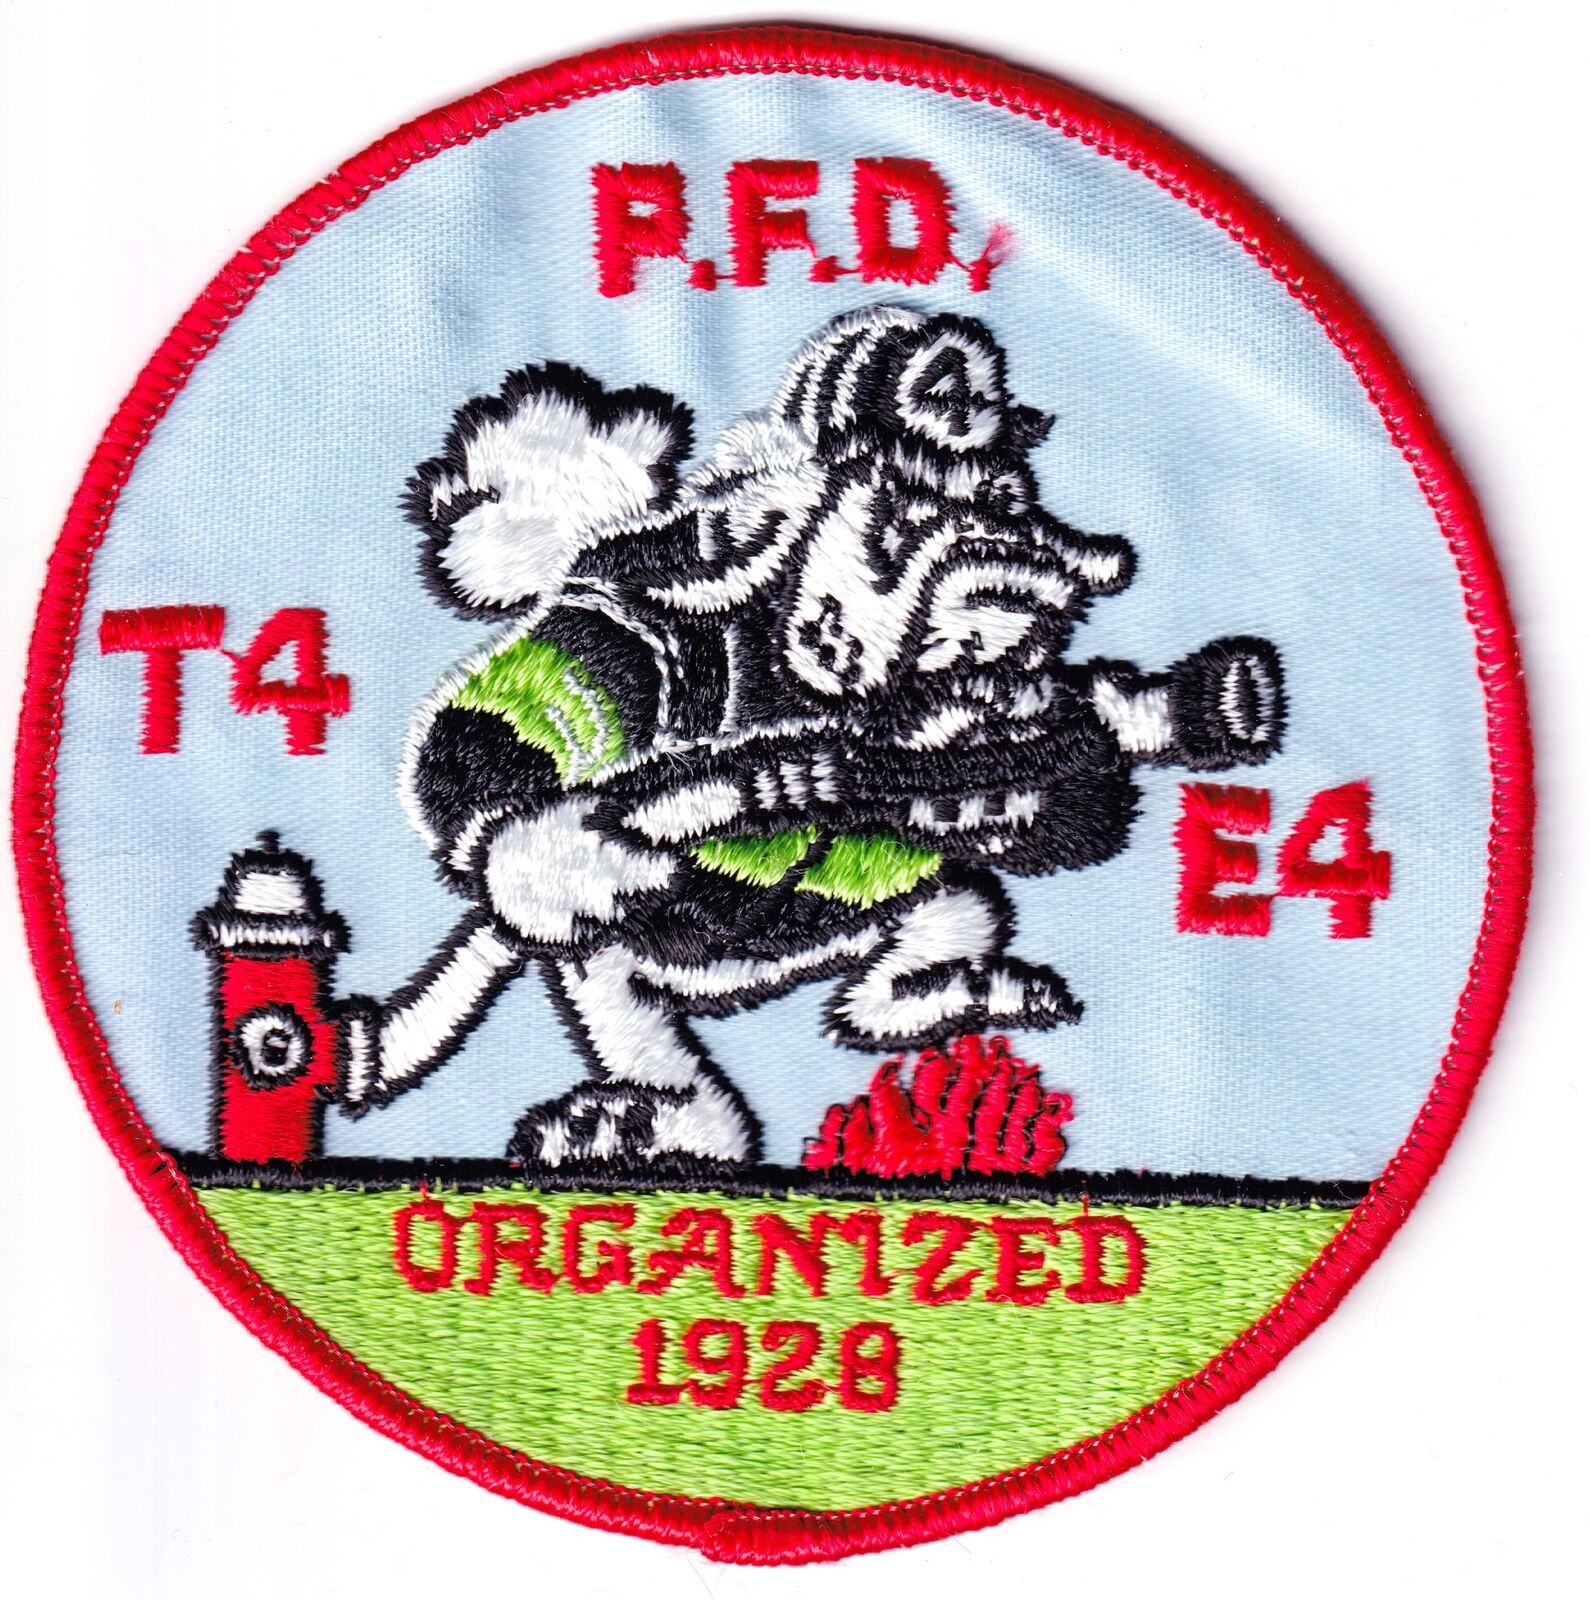 Vintage PFD T4 E4 Organized 1928 Bulldog Firefighter Shoulder Patch 4\